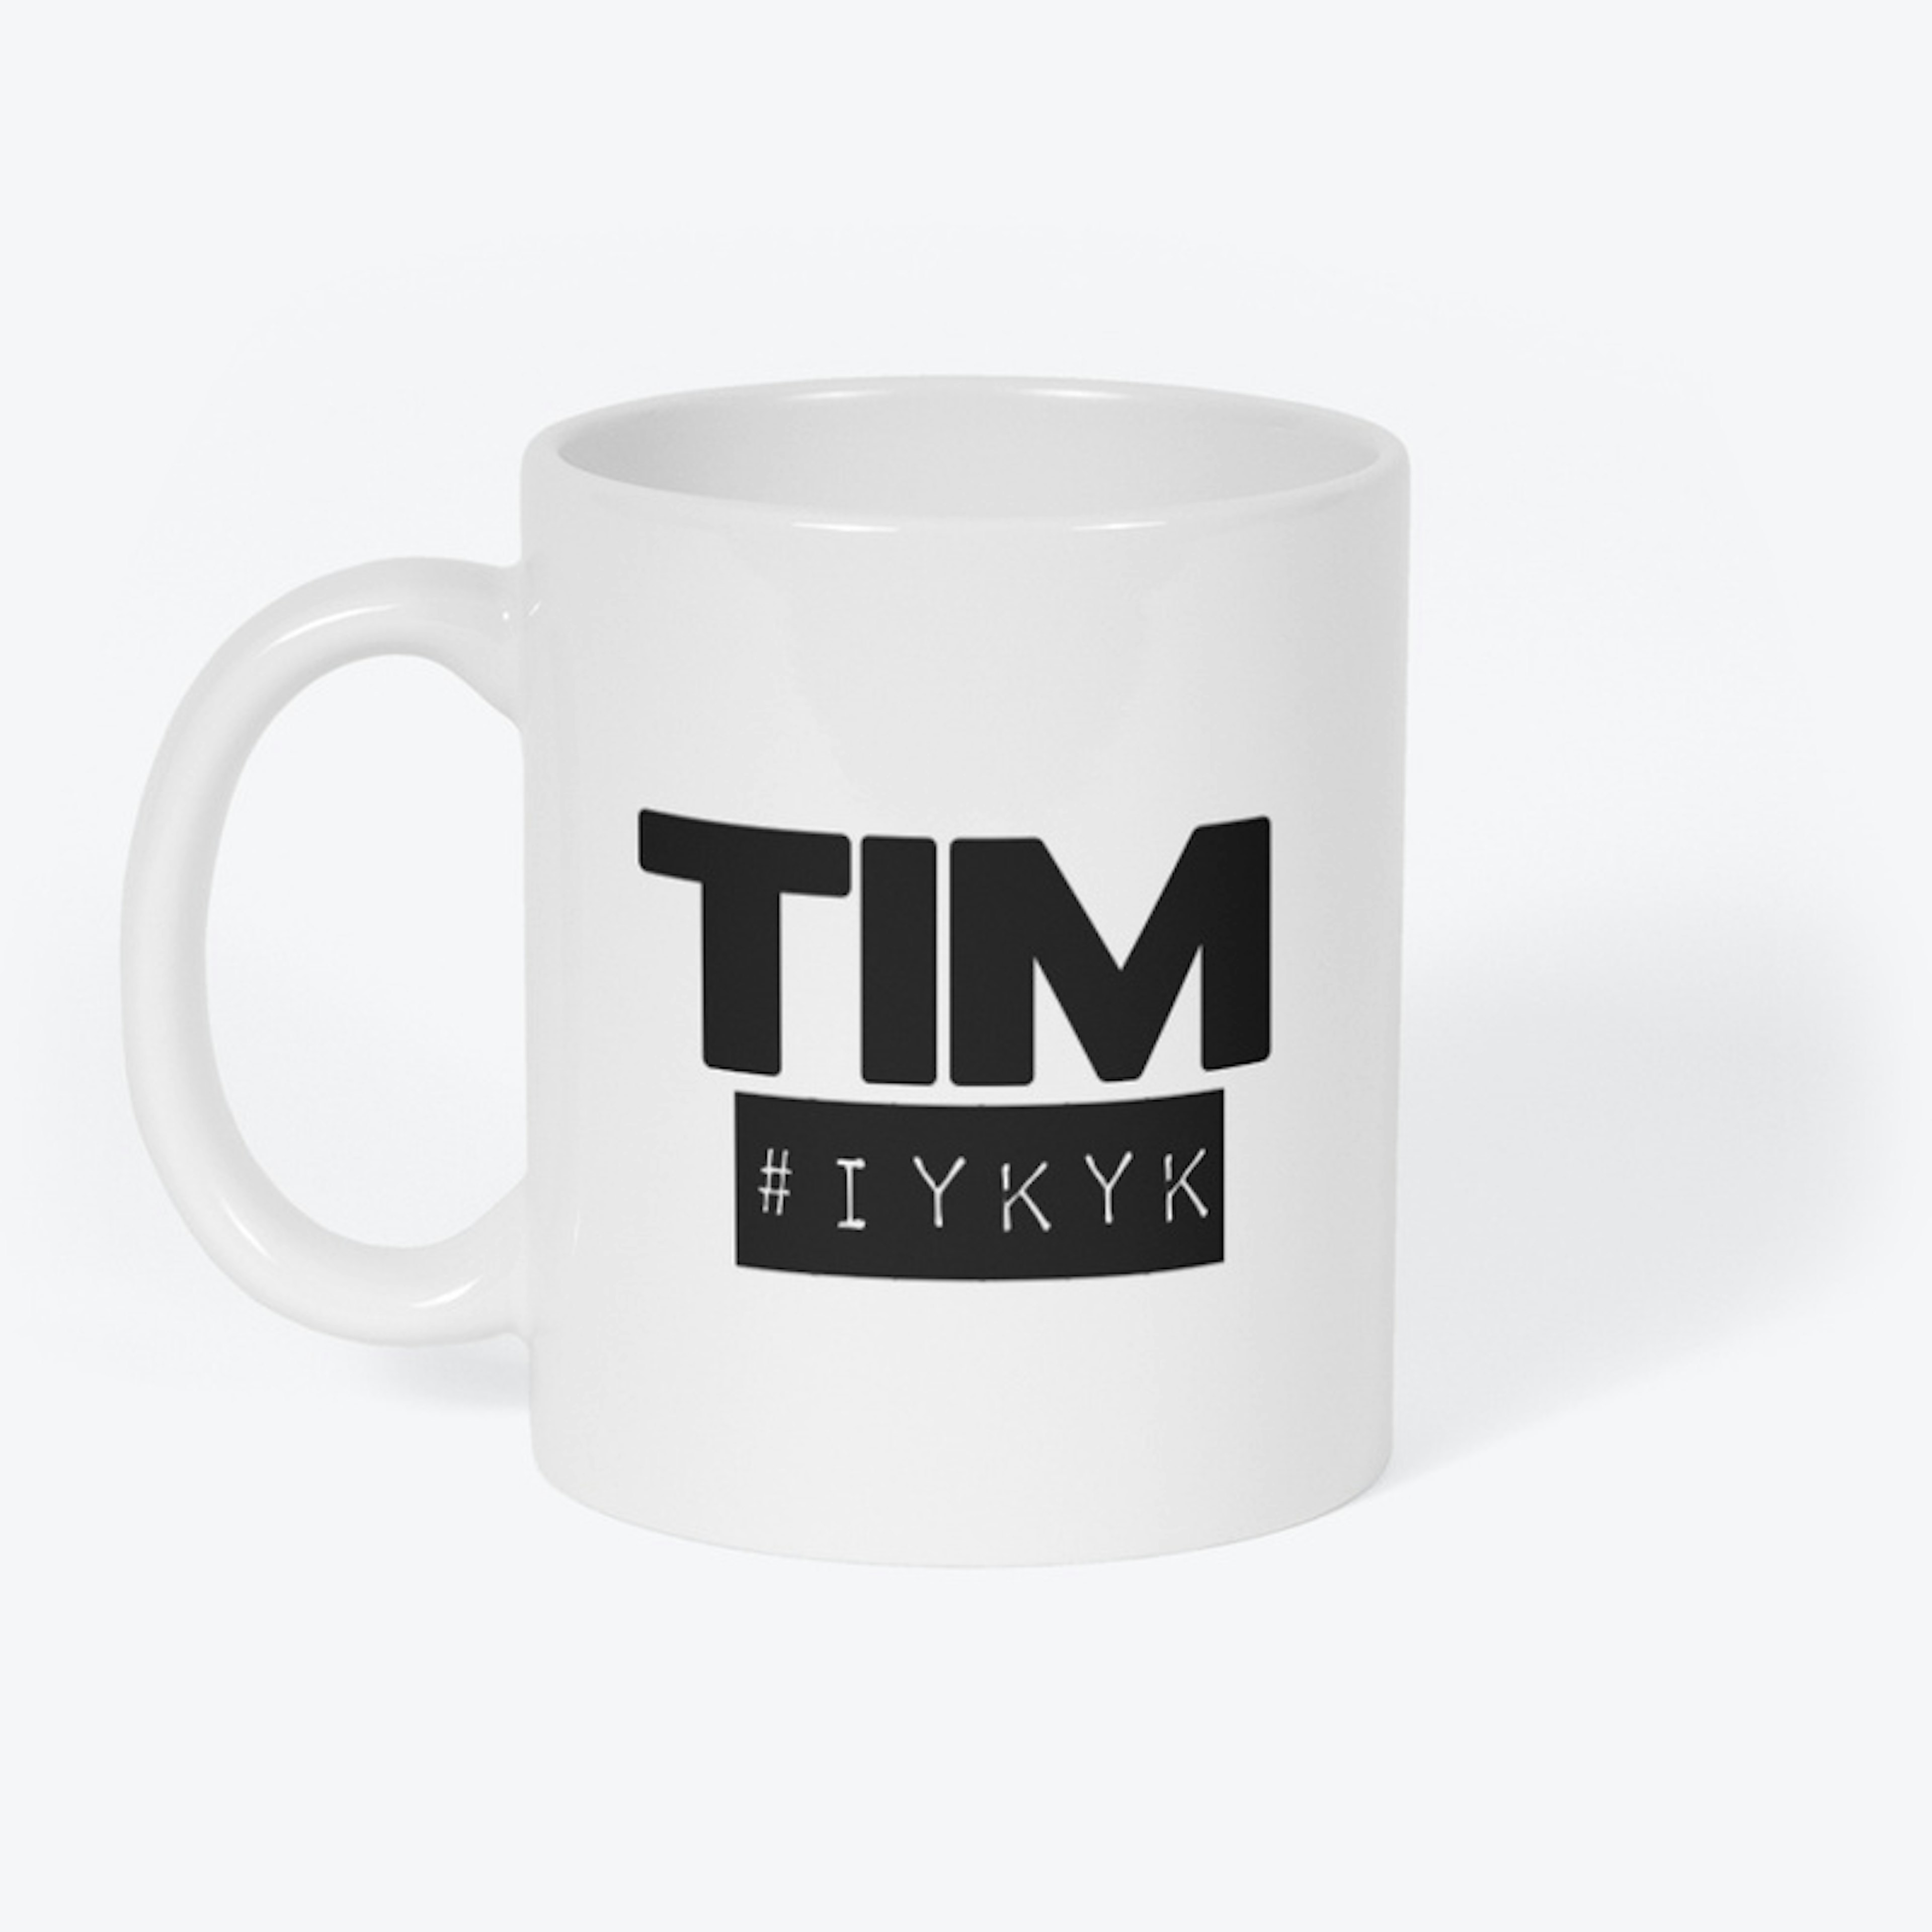 Tim #IYKYK